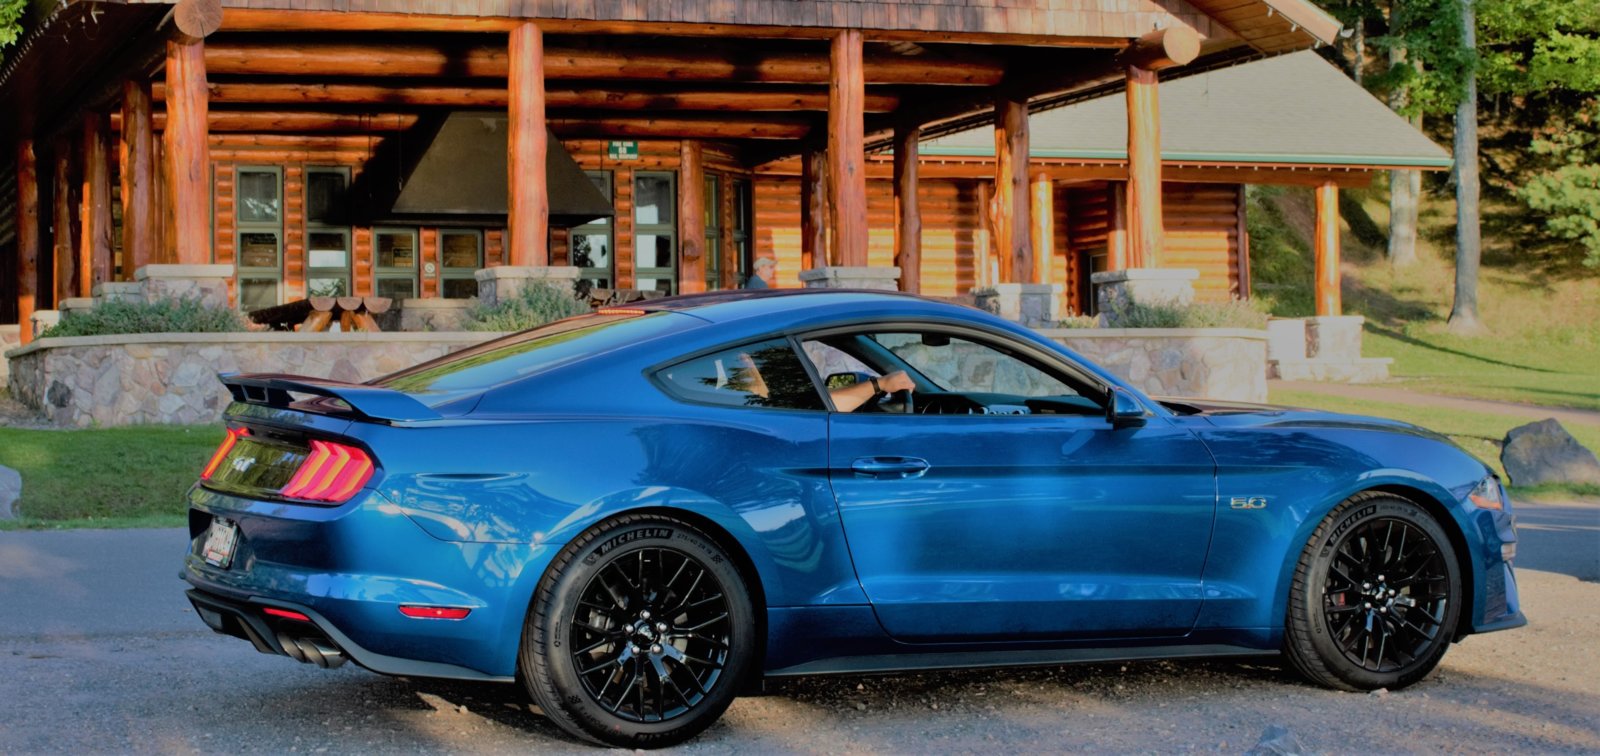 2018 Mustang GT Presque isle (2).jpg